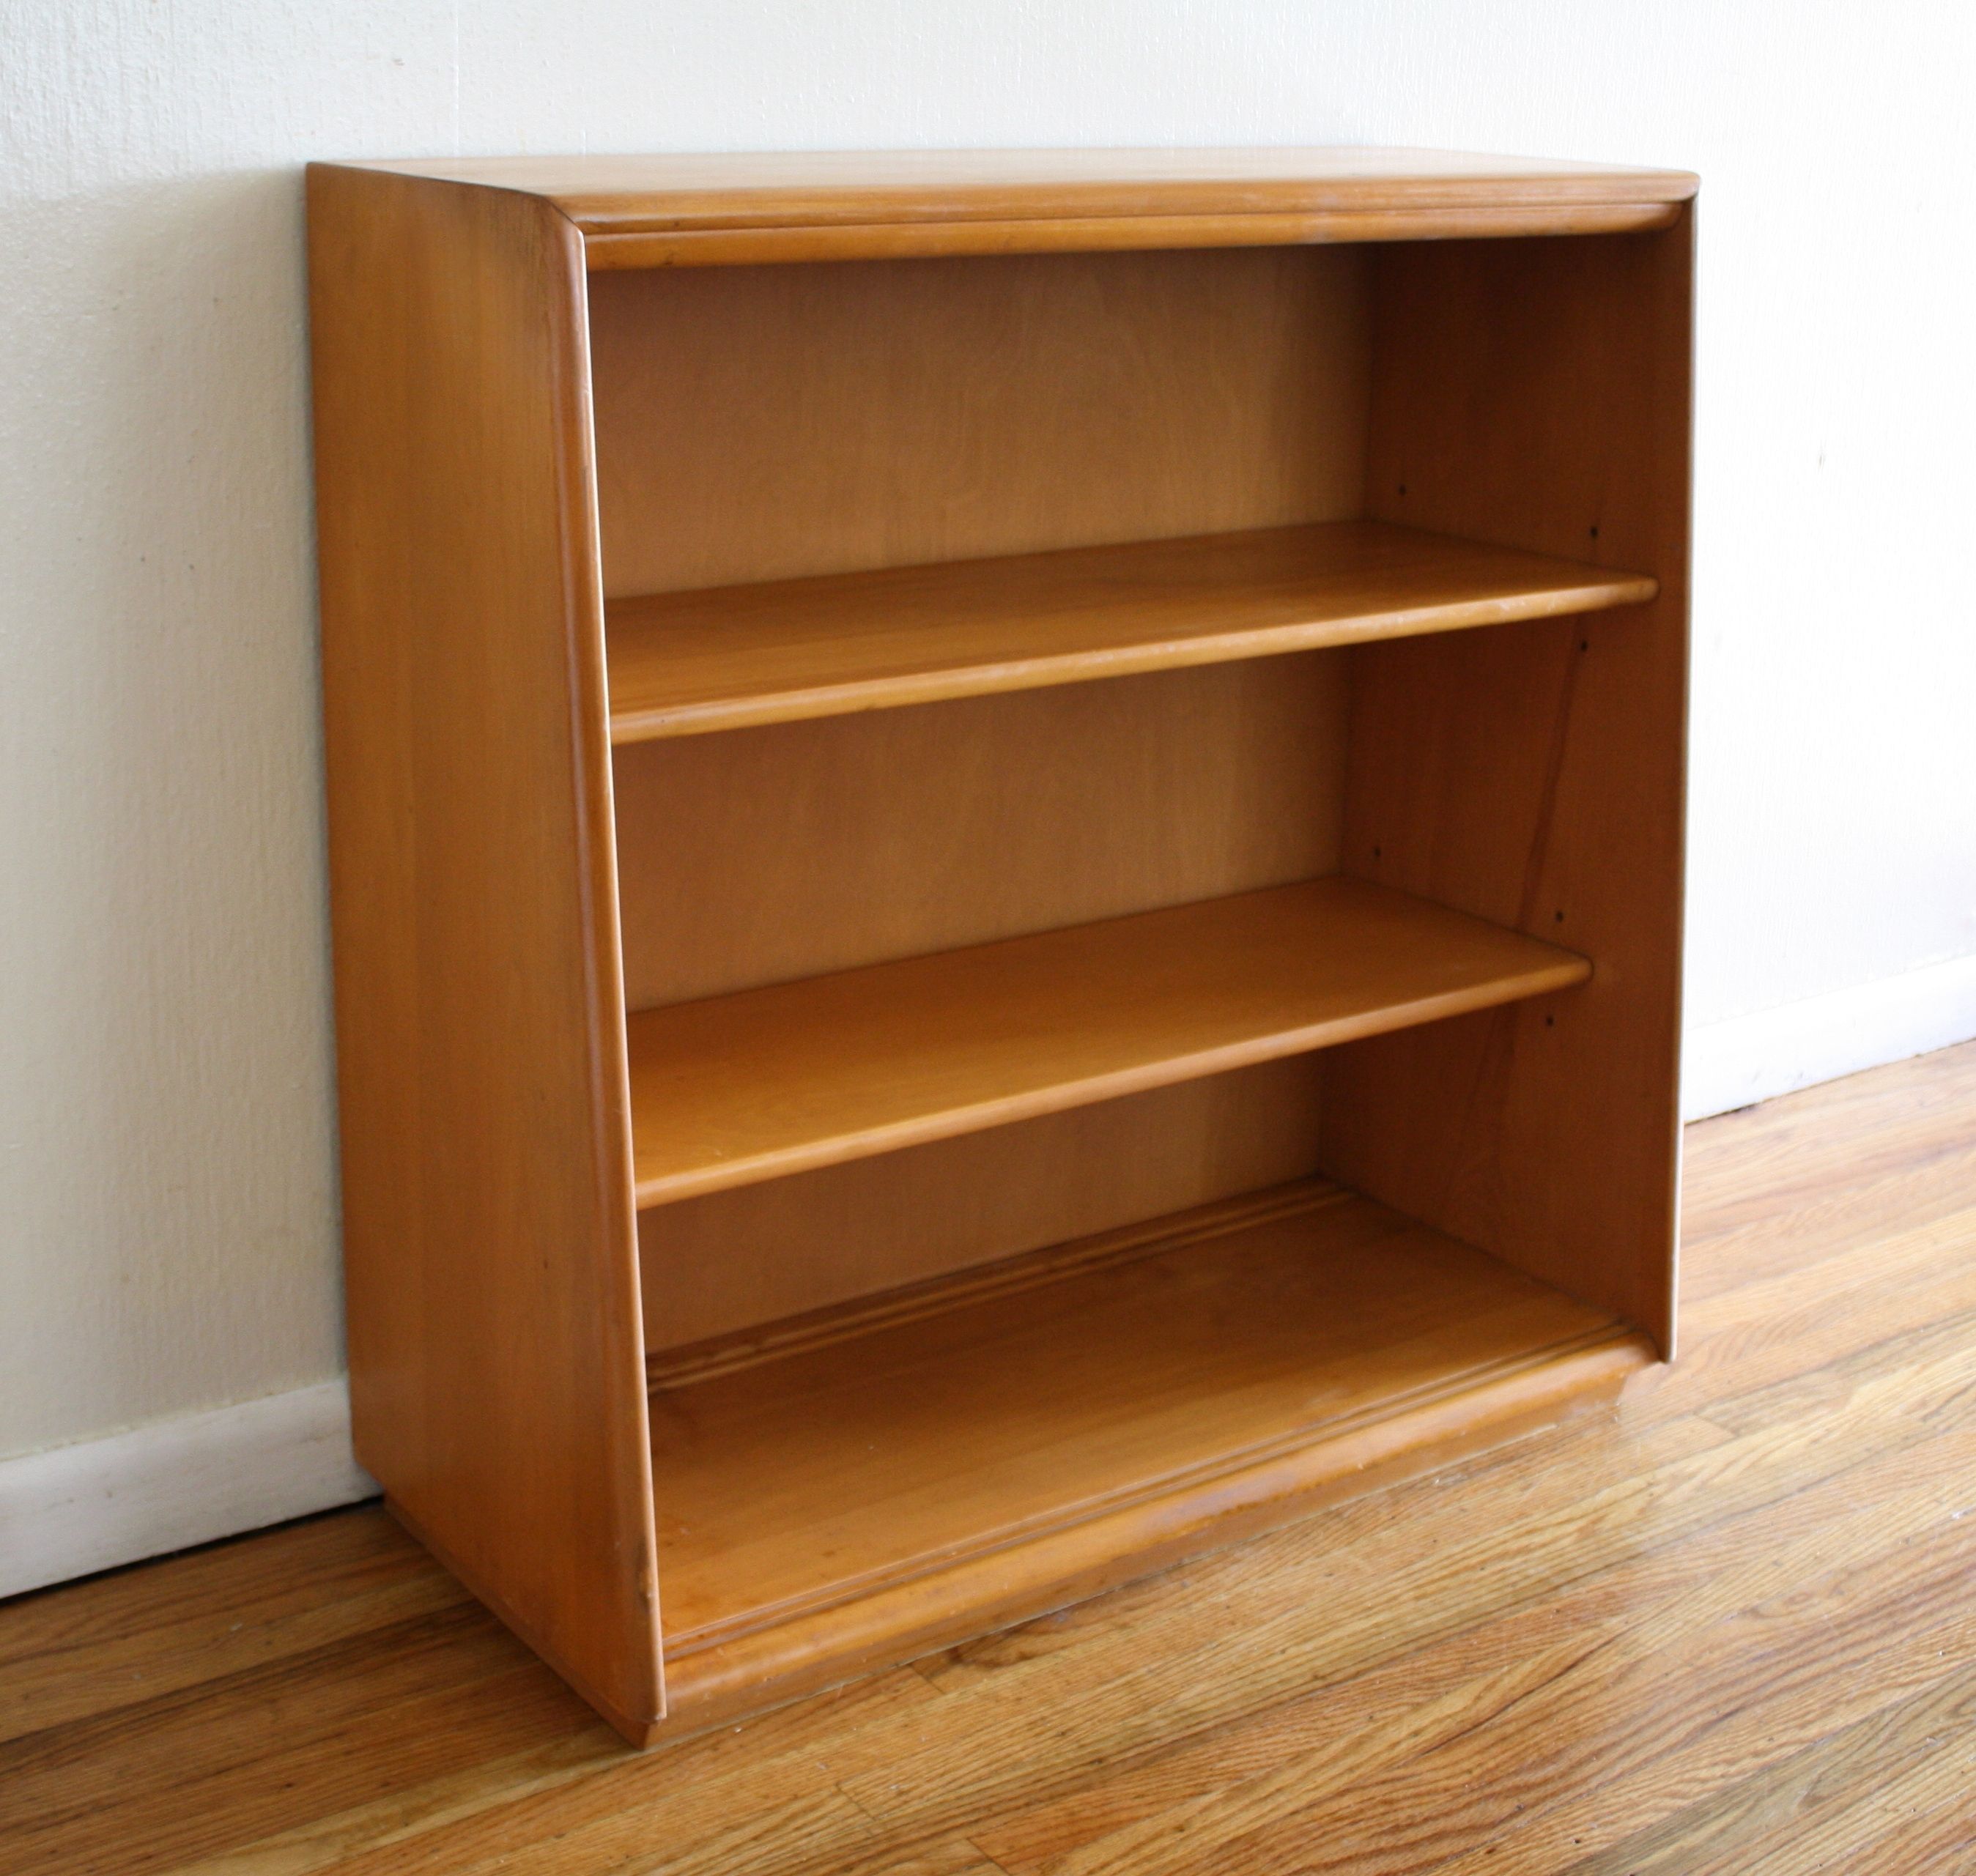 Favorite Solid Oak Shelves Inside Solid Wood Shelves – Shelves Ideas (View 15 of 15)